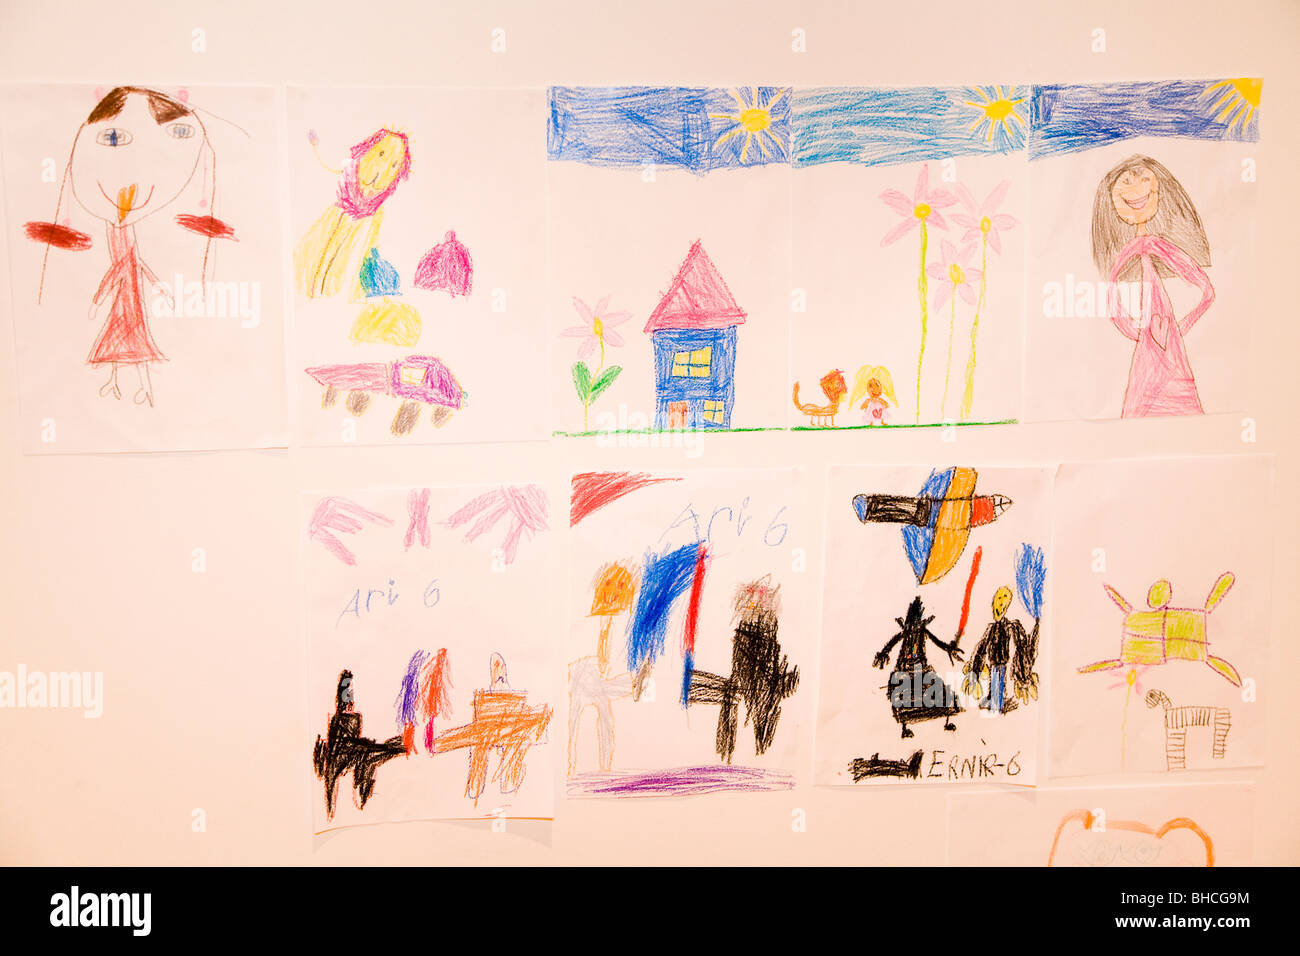 https://c8.alamy.com/comp/BHCG9M/drawings-done-by-six-y-o-children-iceland-BHCG9M.jpg